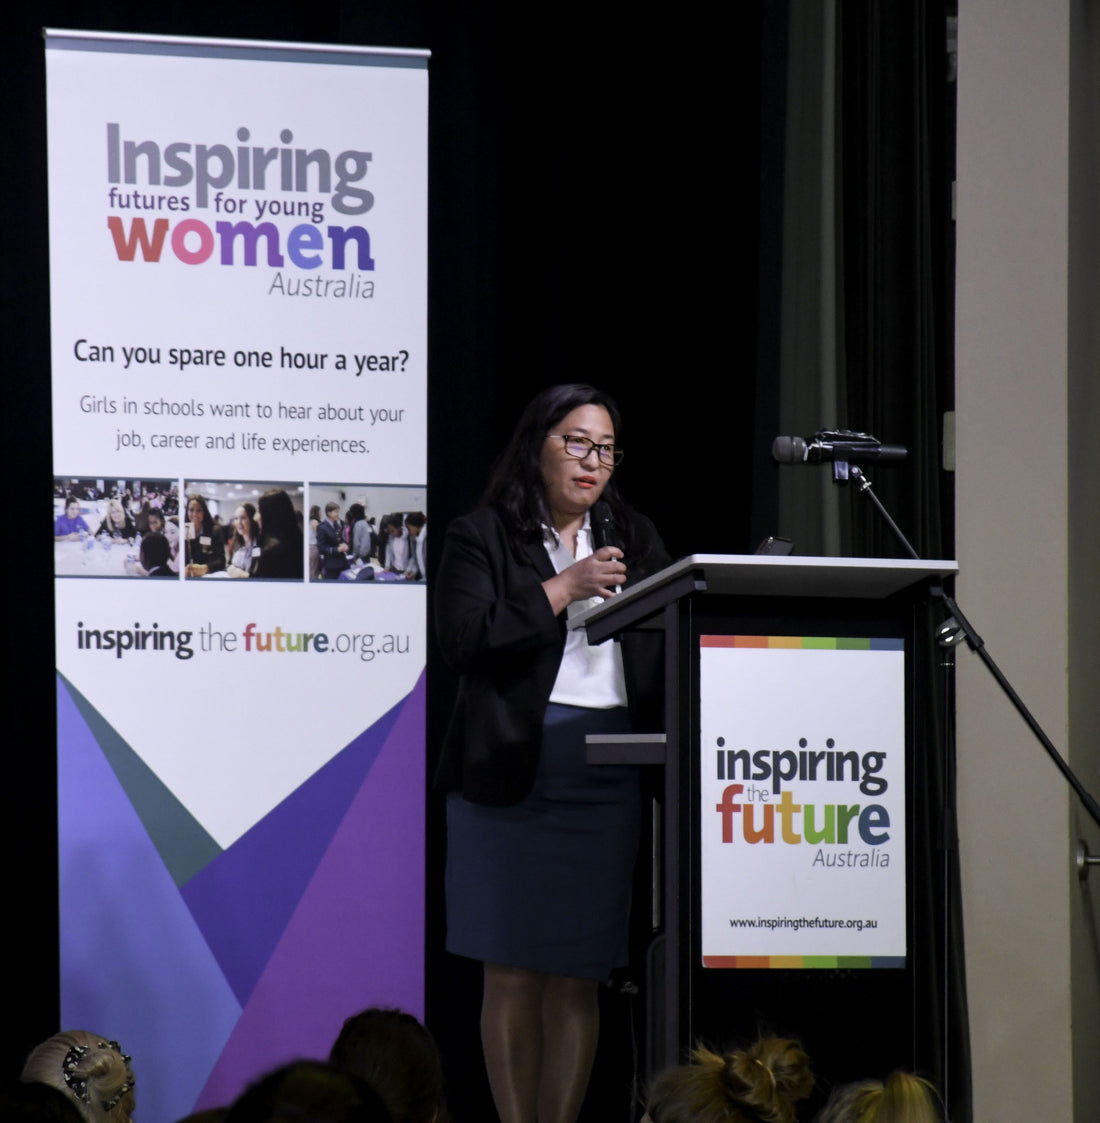 Nutricraft Co-Founder at the Inspiring Women Australia